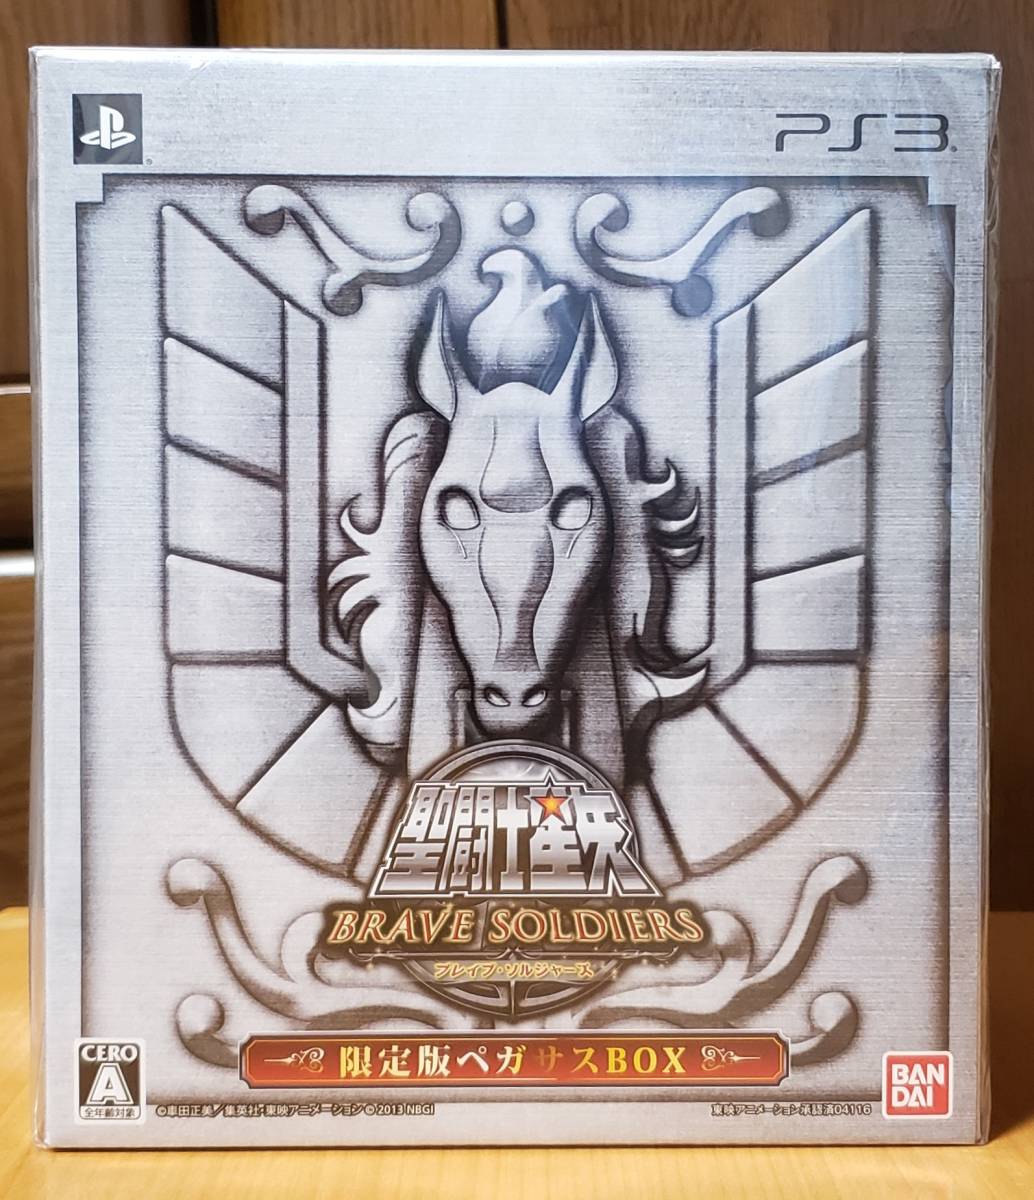 PS3 聖闘士星矢 ブレイブ・ソルジャーズ 限定版ペガサスBOX 聖闘士聖衣神話EX ペガサス星矢 新生青銅聖衣 ORIGINAL COLOR EDITION